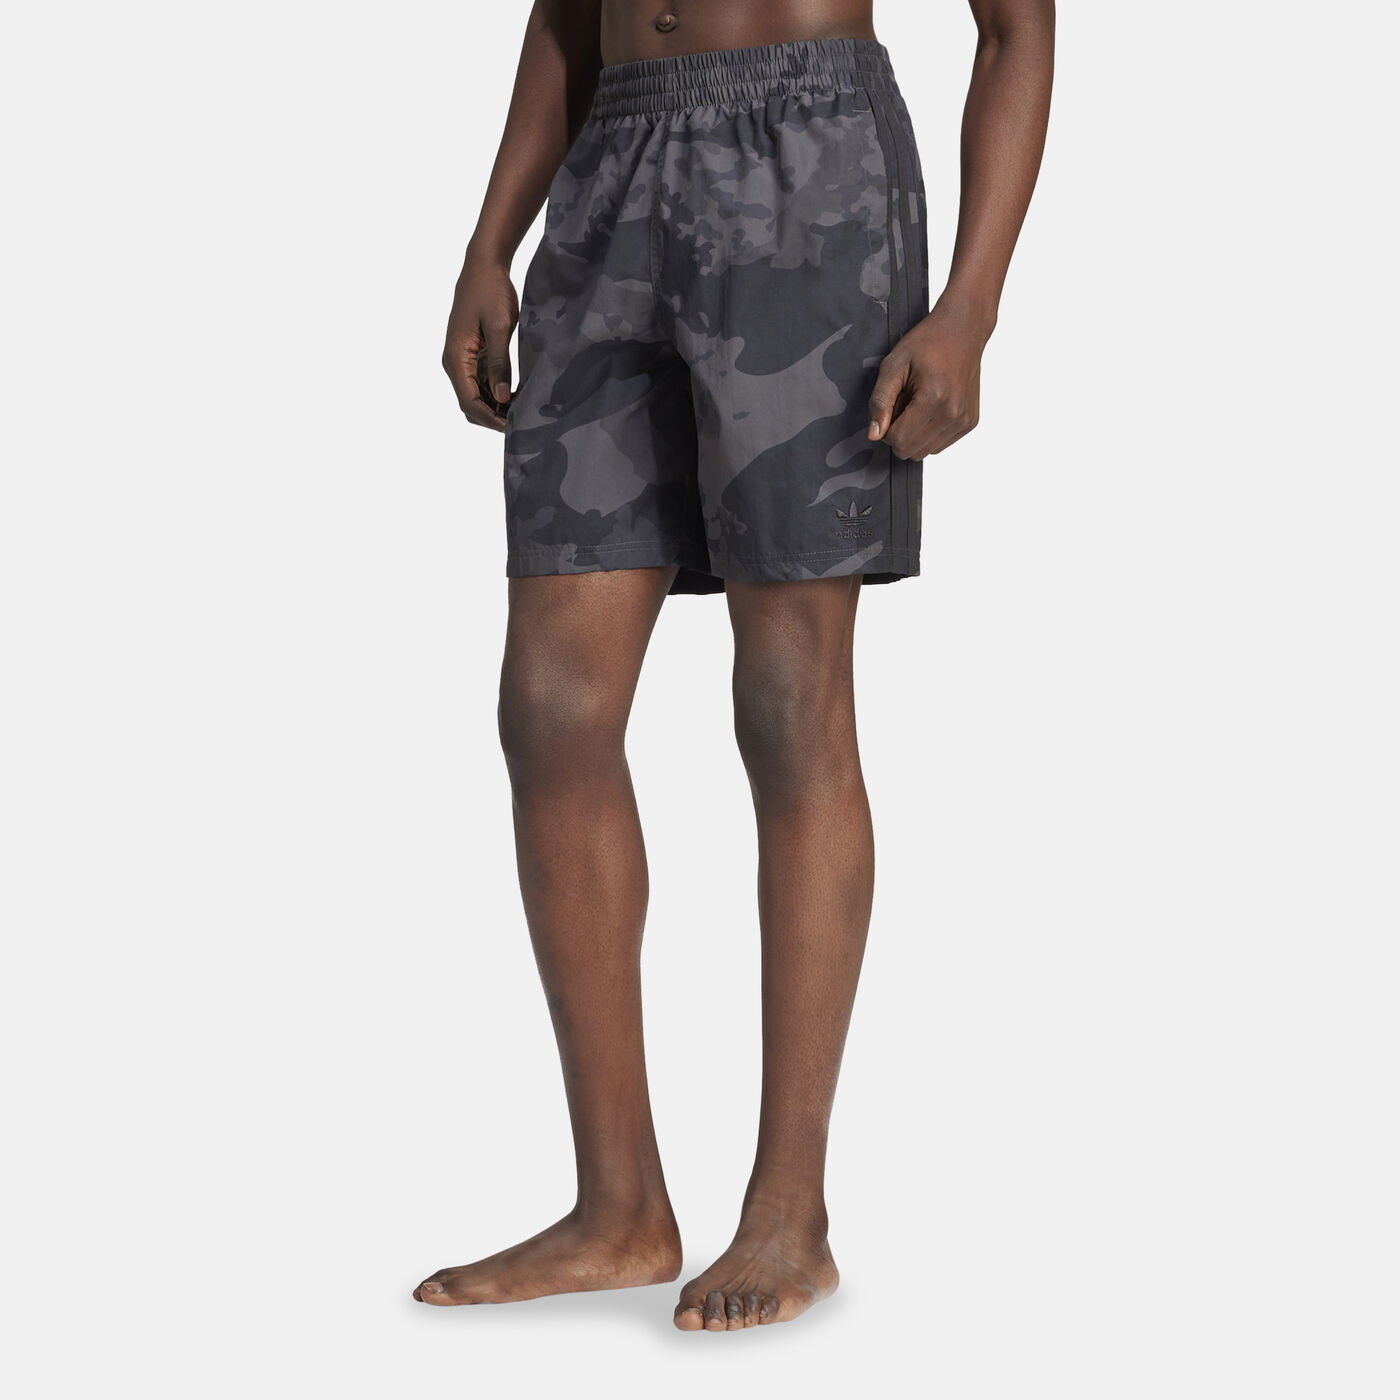 Men's Camo Printed Swimming Shorts